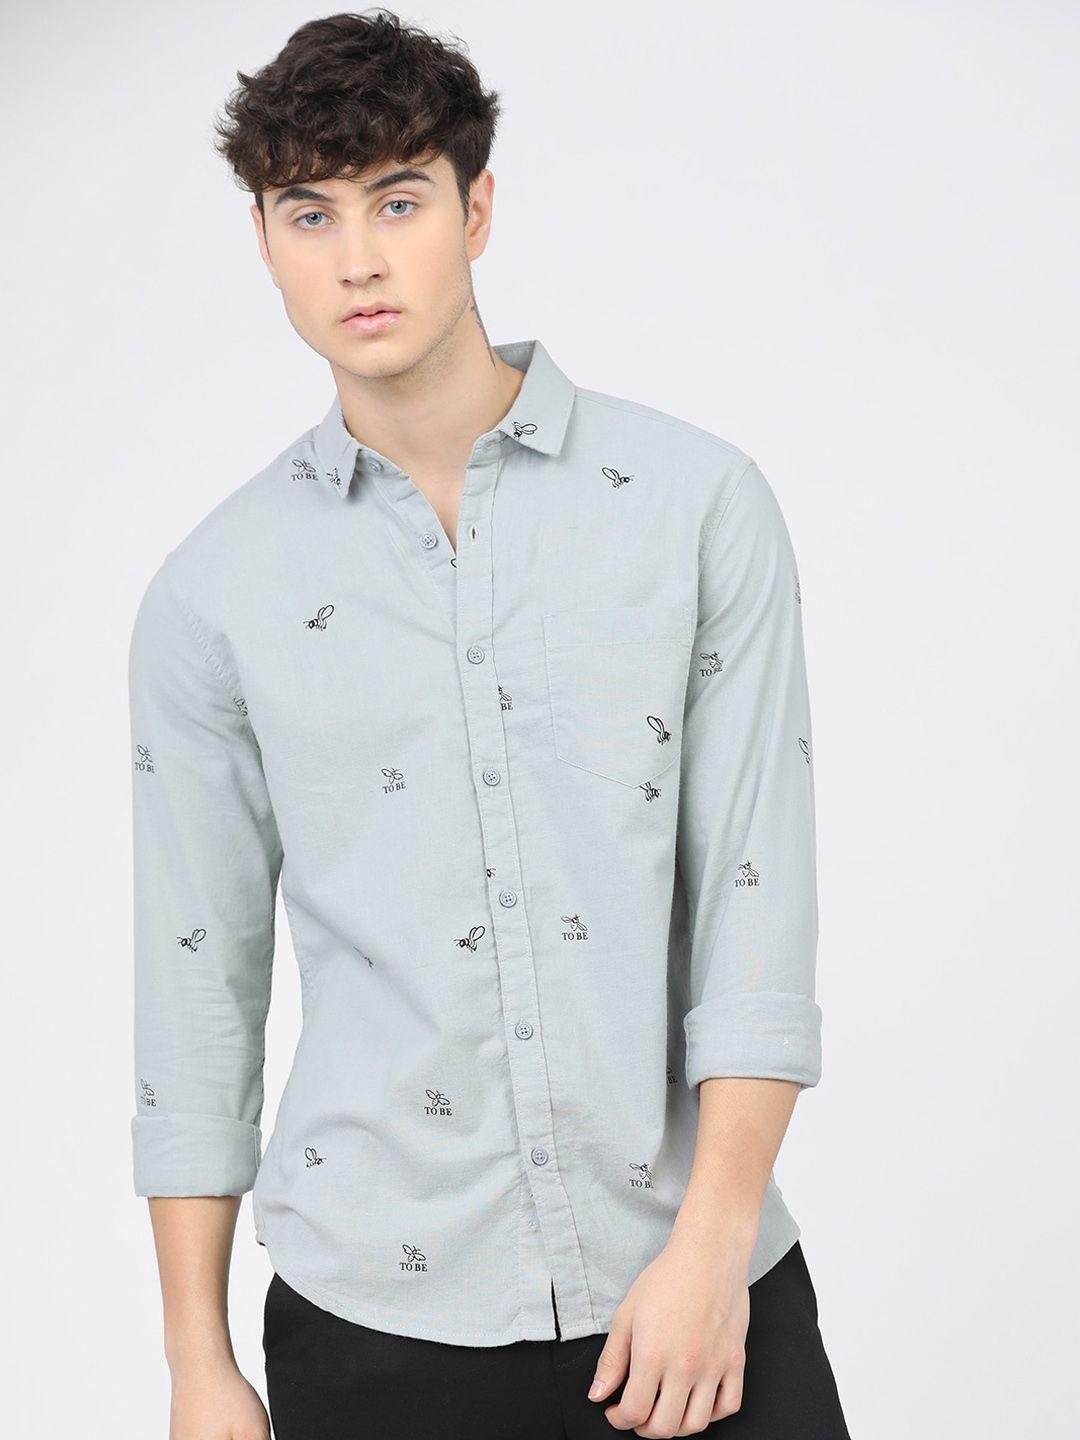 ketch-men-grey-slim-fit-opaque-printed-casual-shirt